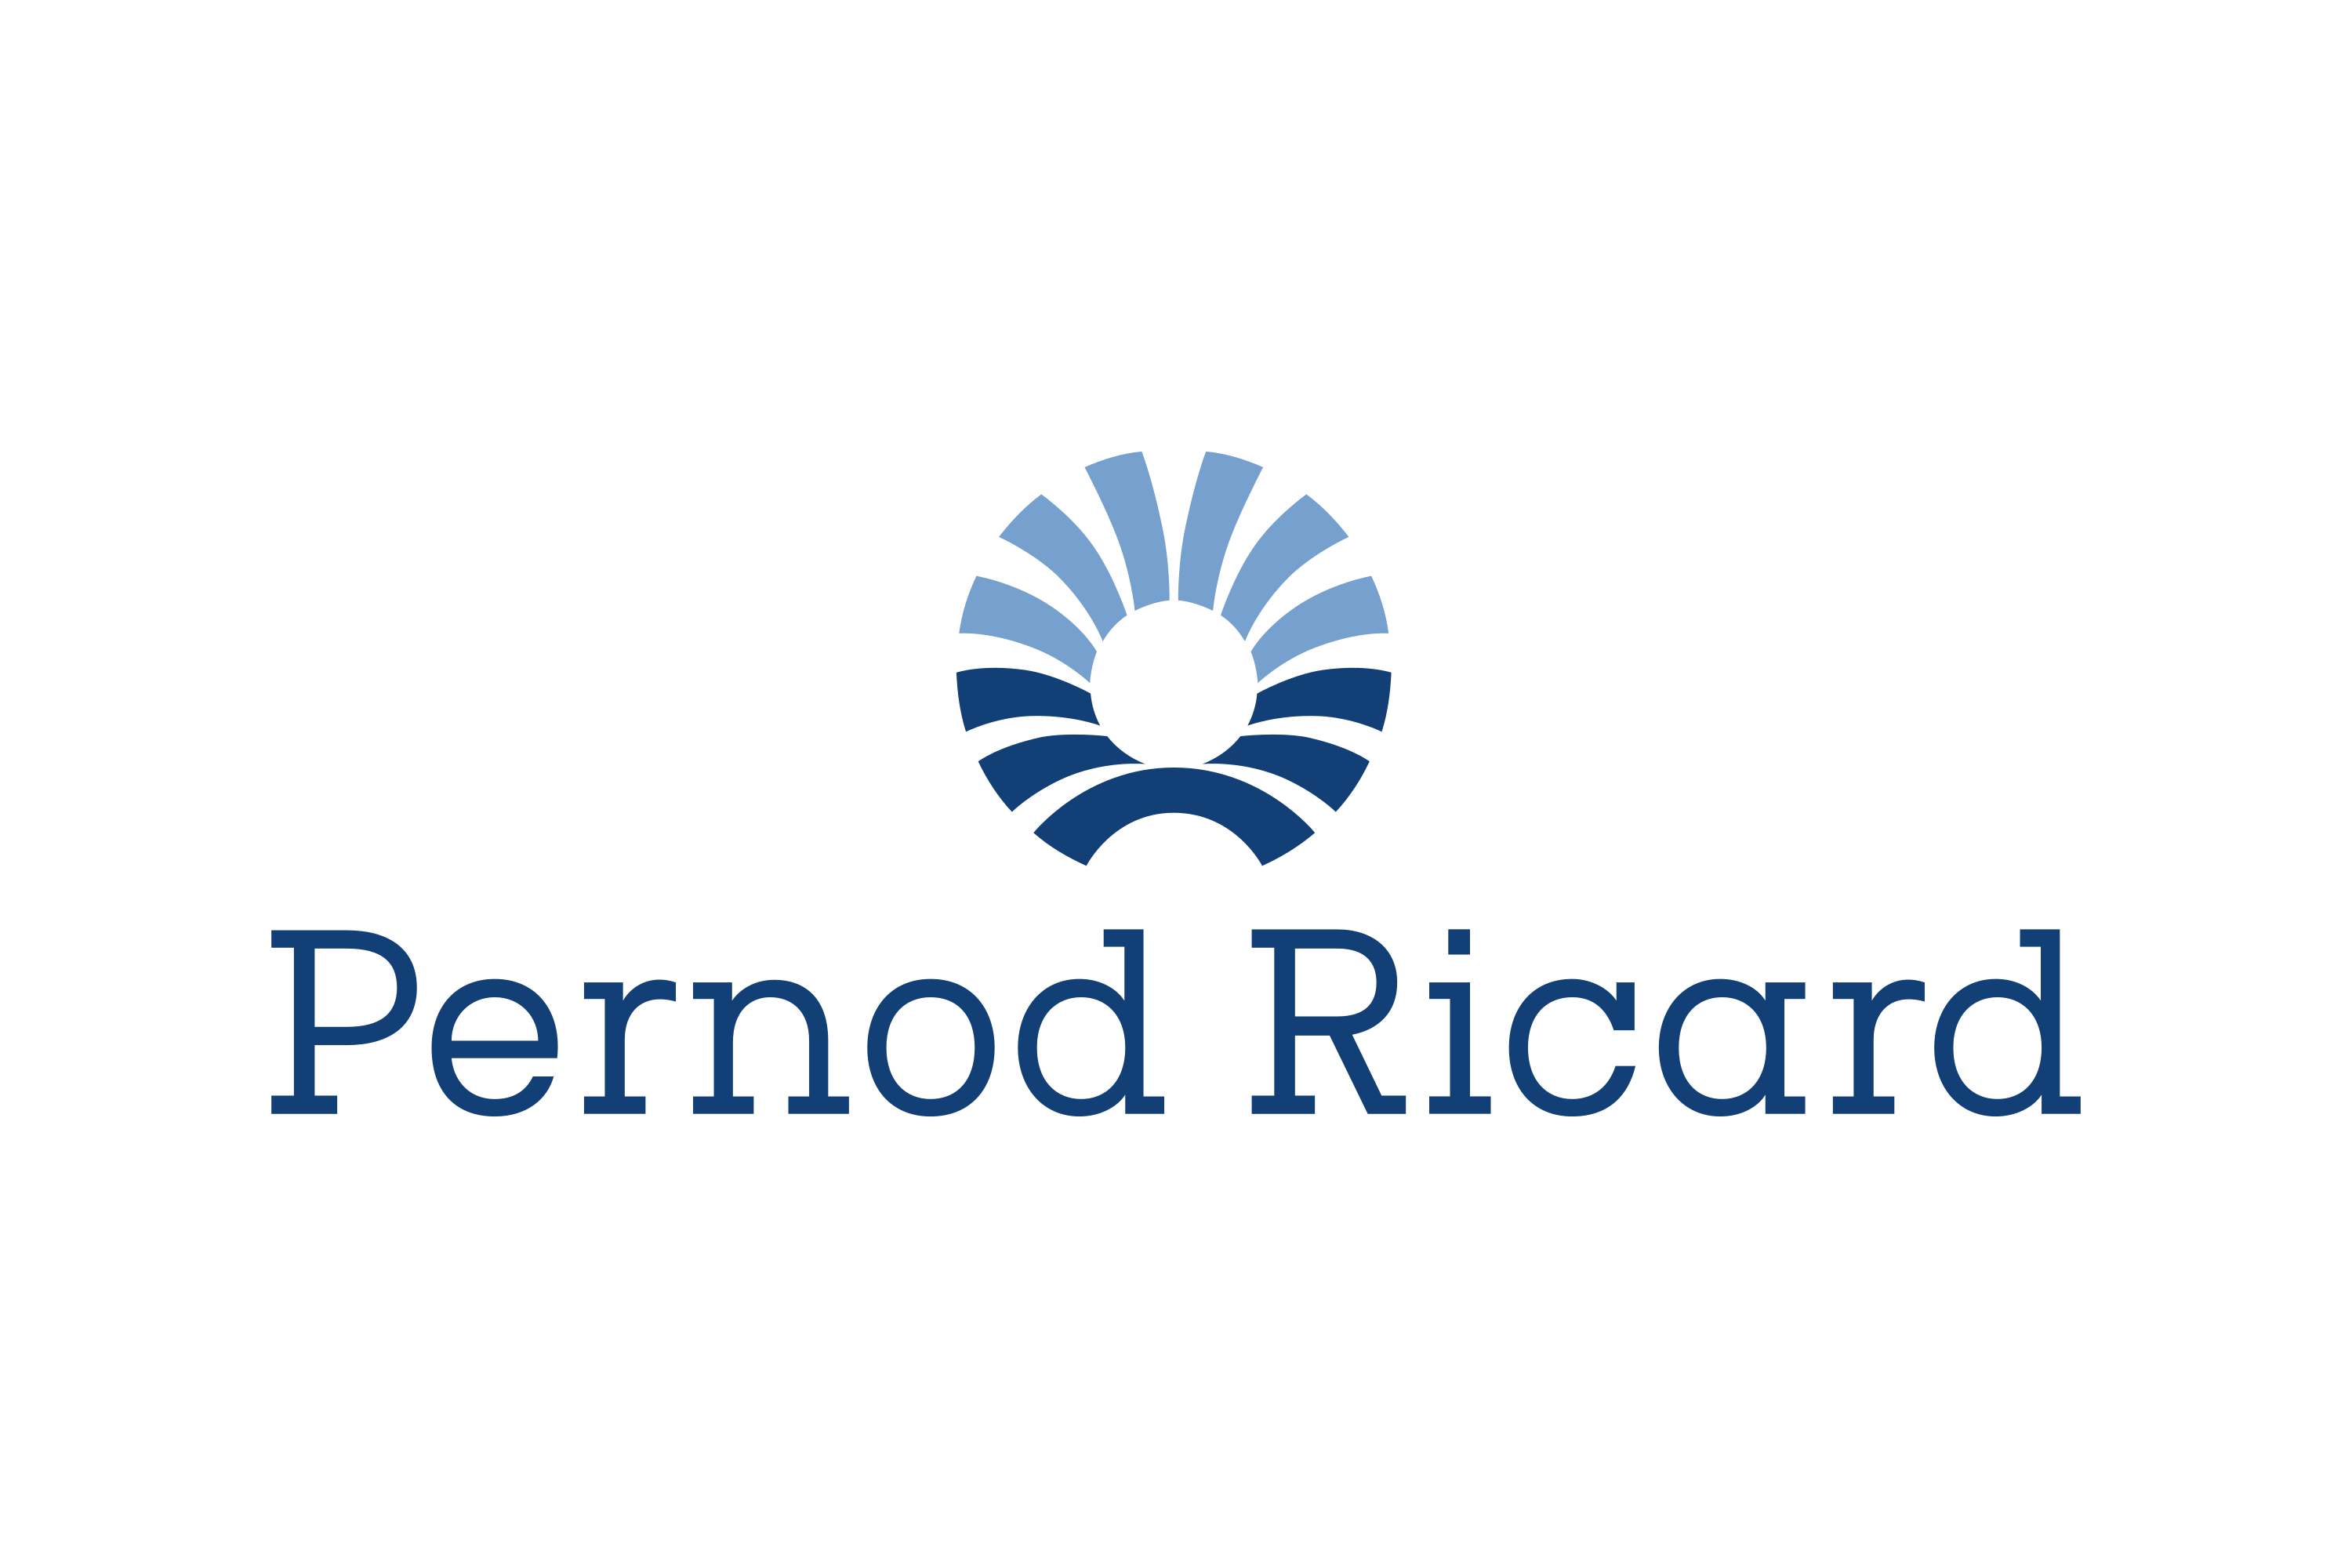 Download Pernod Ricard Logo in SVG Vector or PNG File Format - Logo.wine